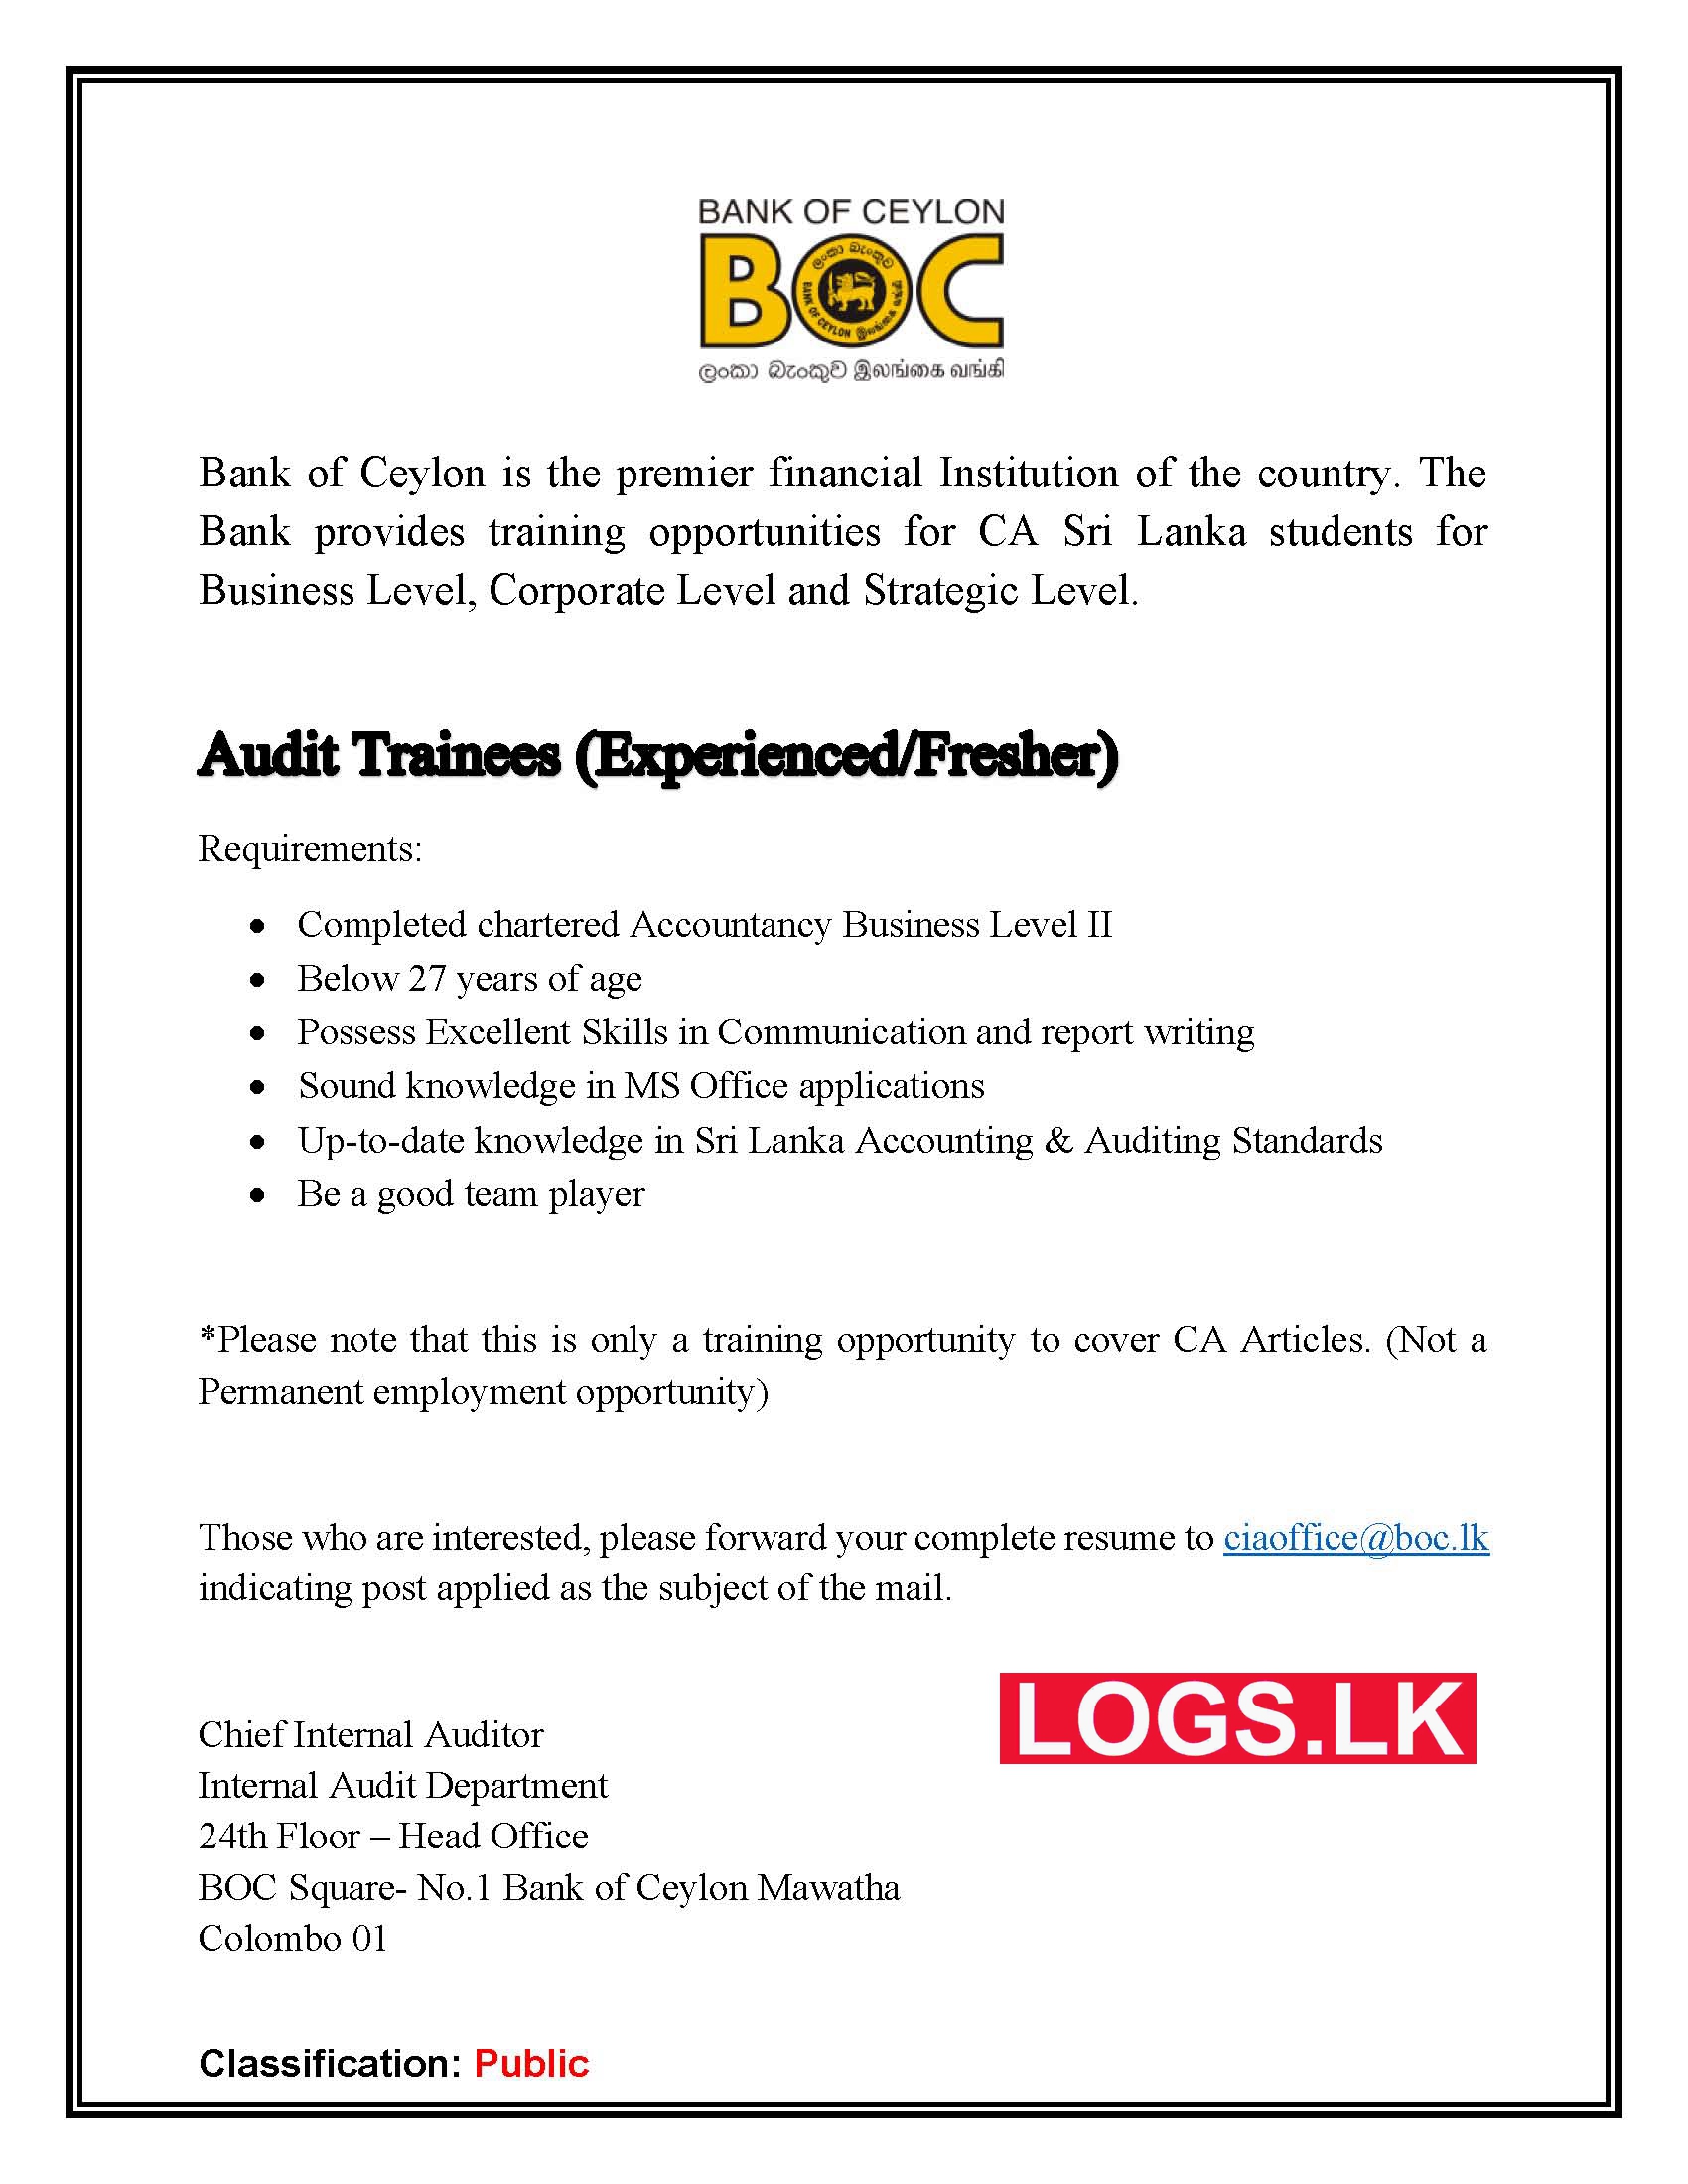 Audit Trainees - Bank of Ceylon Job Vacancies 2023 Application Form, Details Download